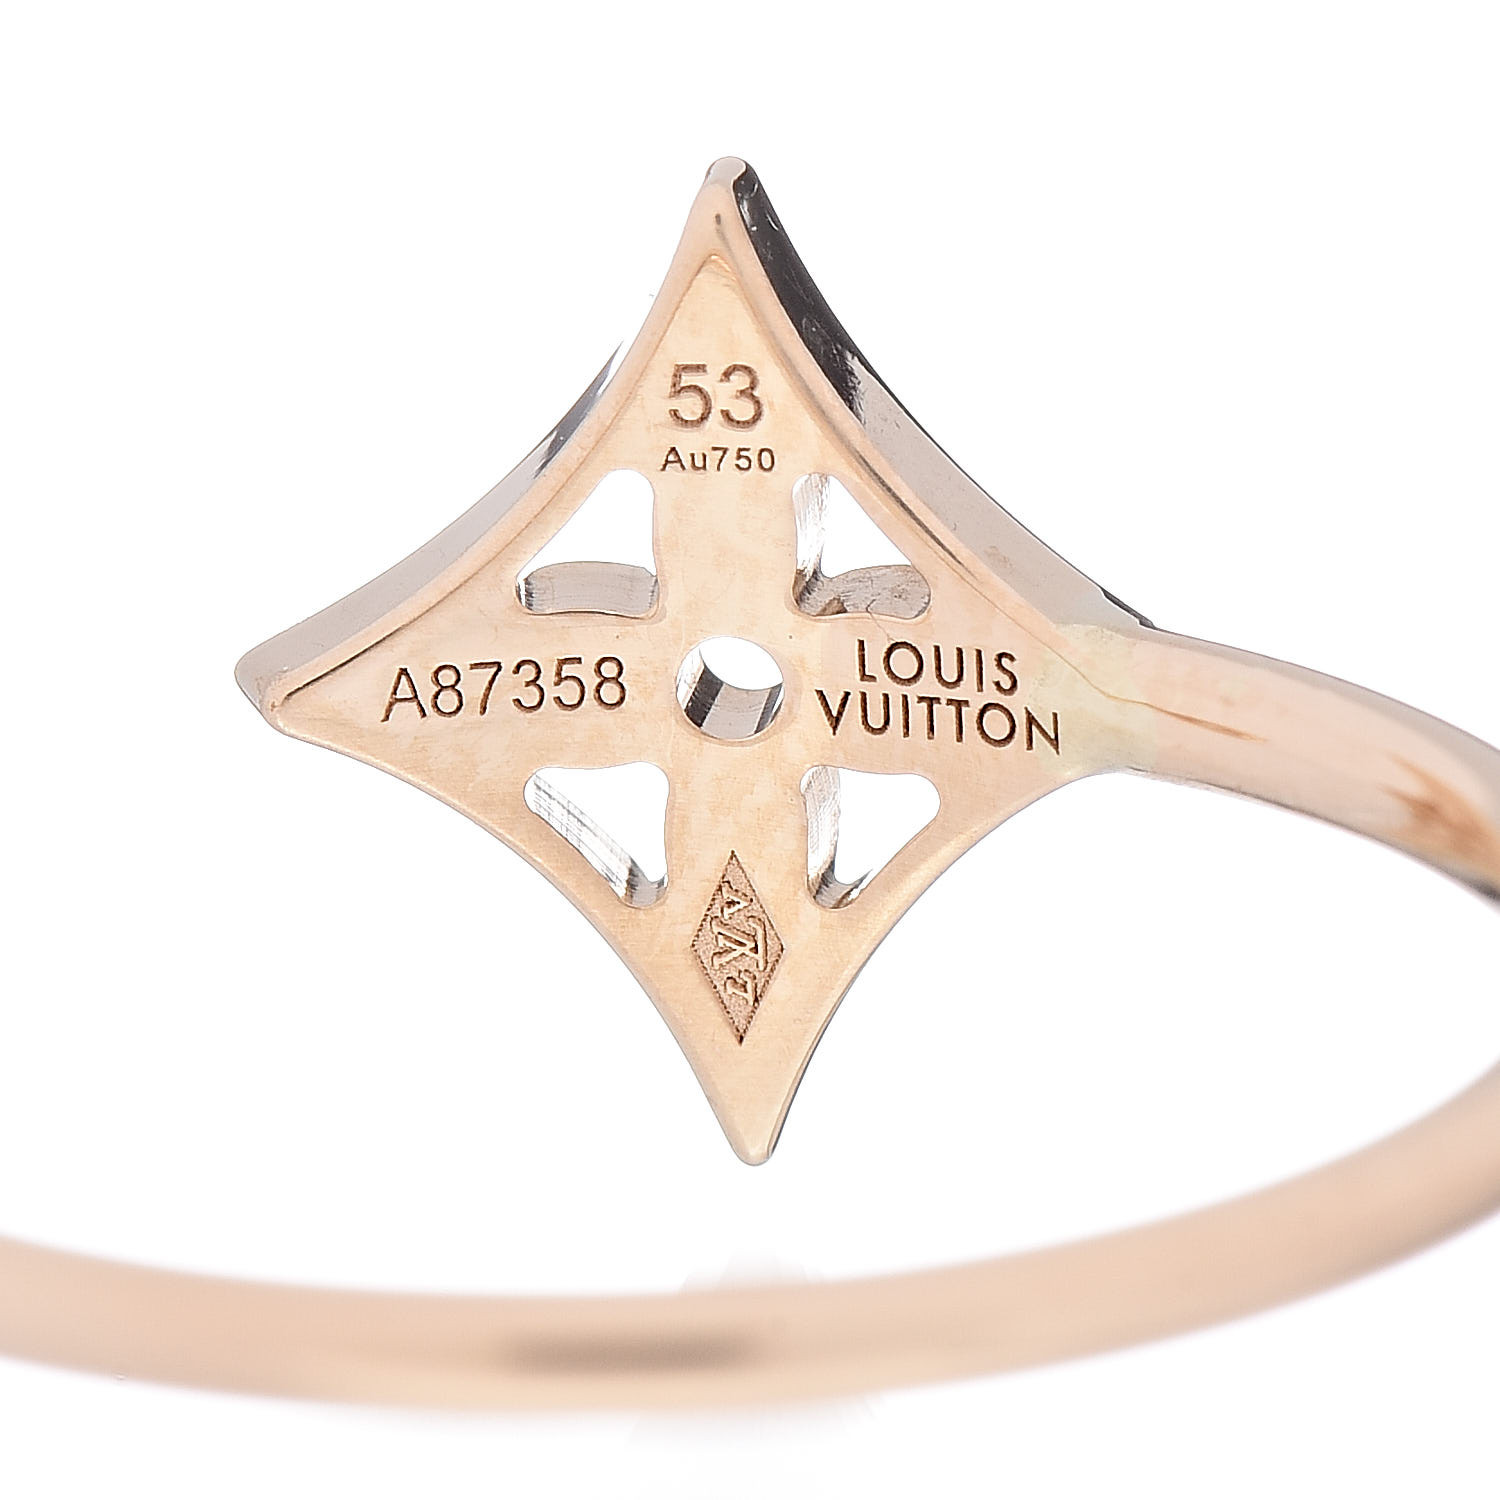 LOUIS VUITTON 18K Yellow Pink White Gold Diamond Idylle Blossom Ring 3 Set 53 6.25 471975